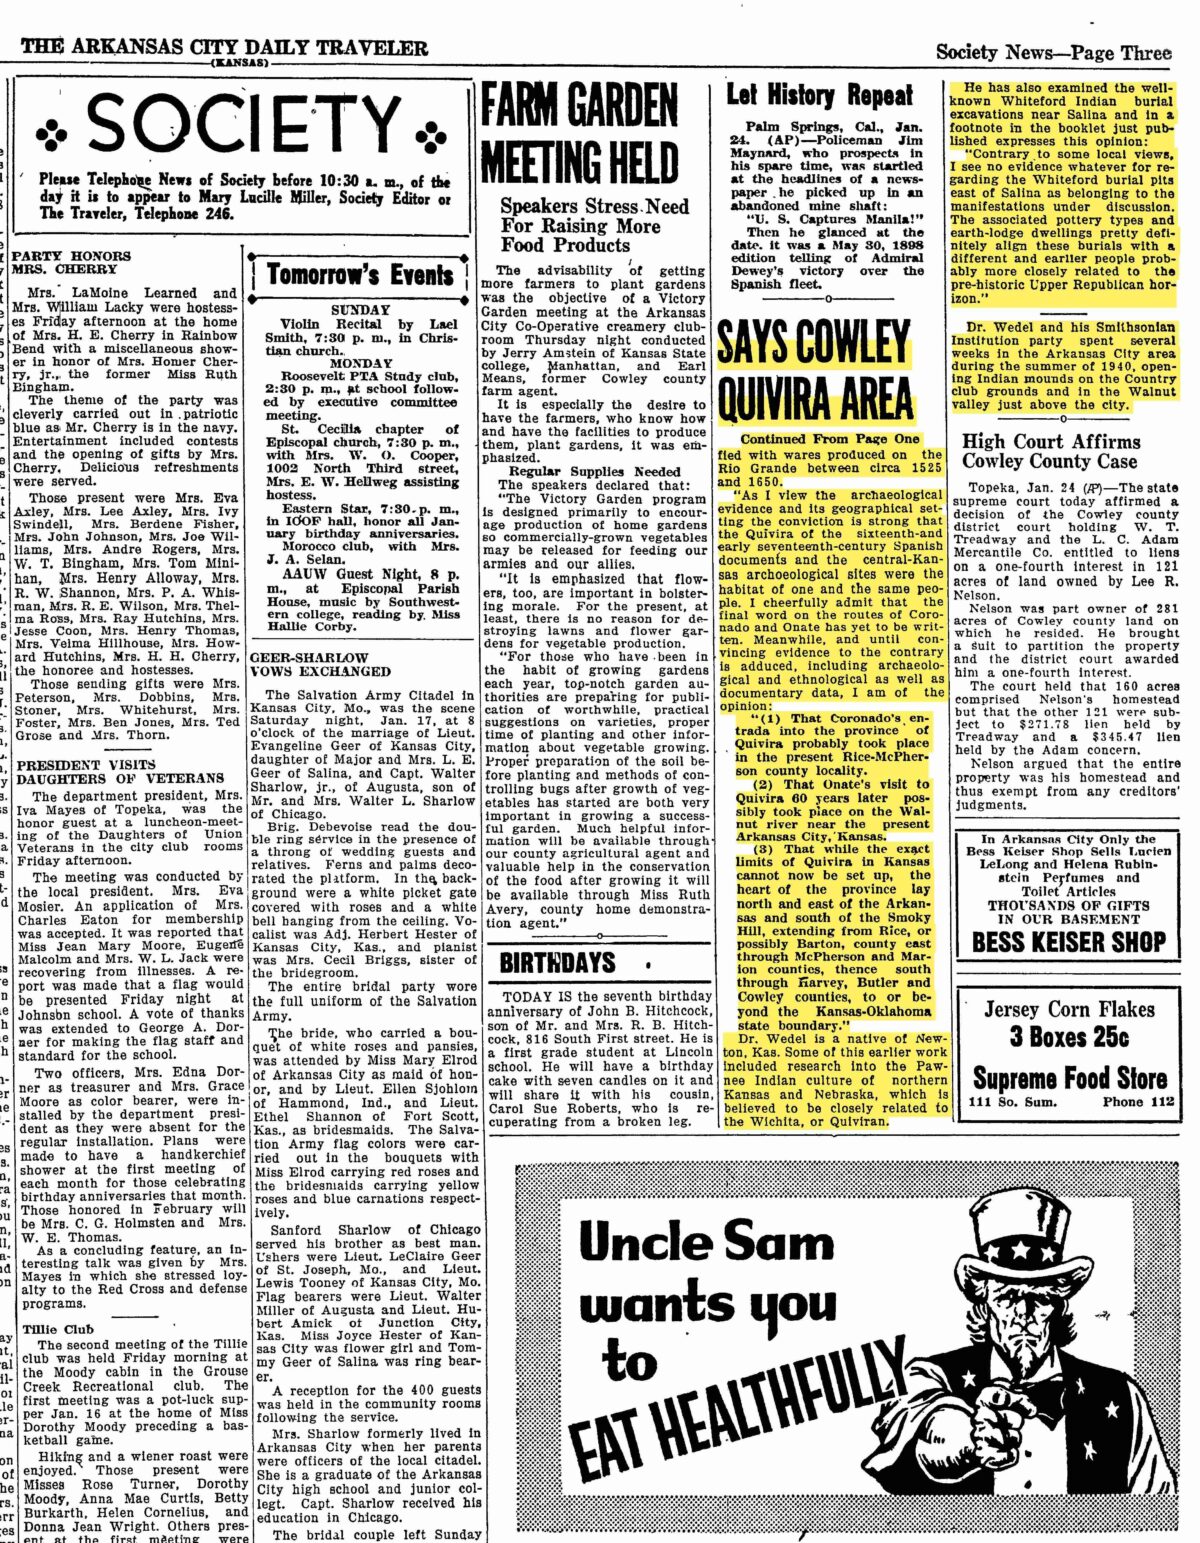 1942 Newspaper Article on Quivira